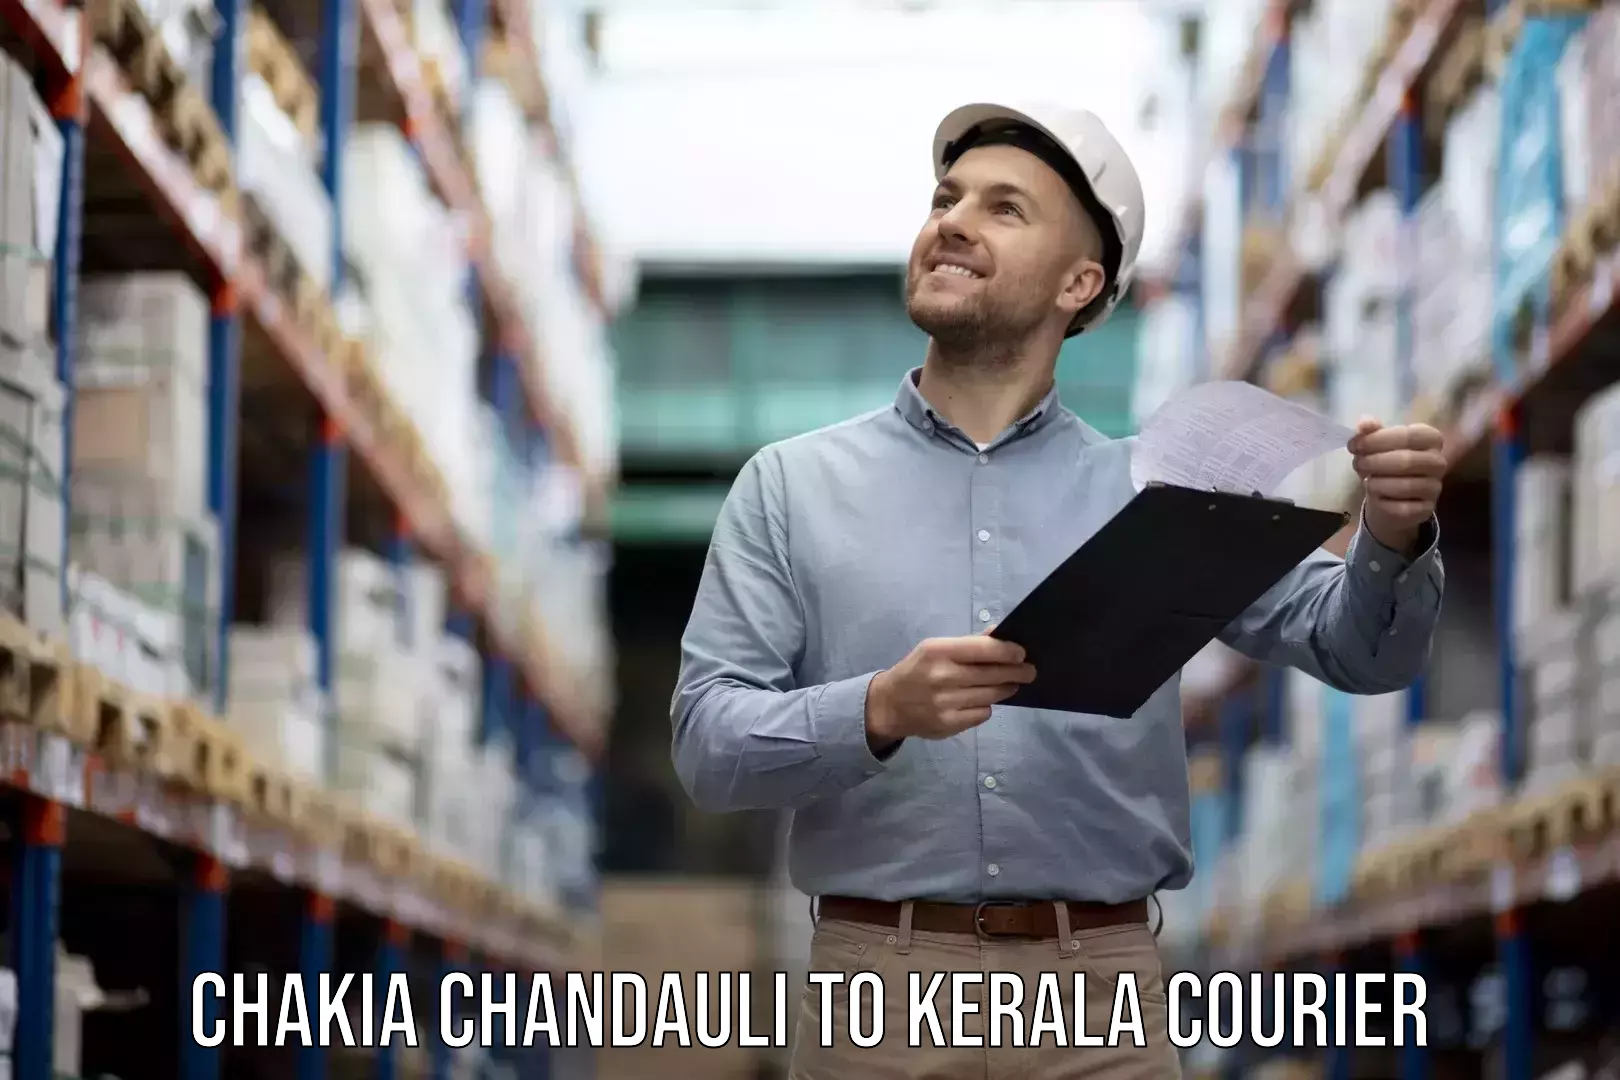 Efficient moving company Chakia Chandauli to Puthukkad